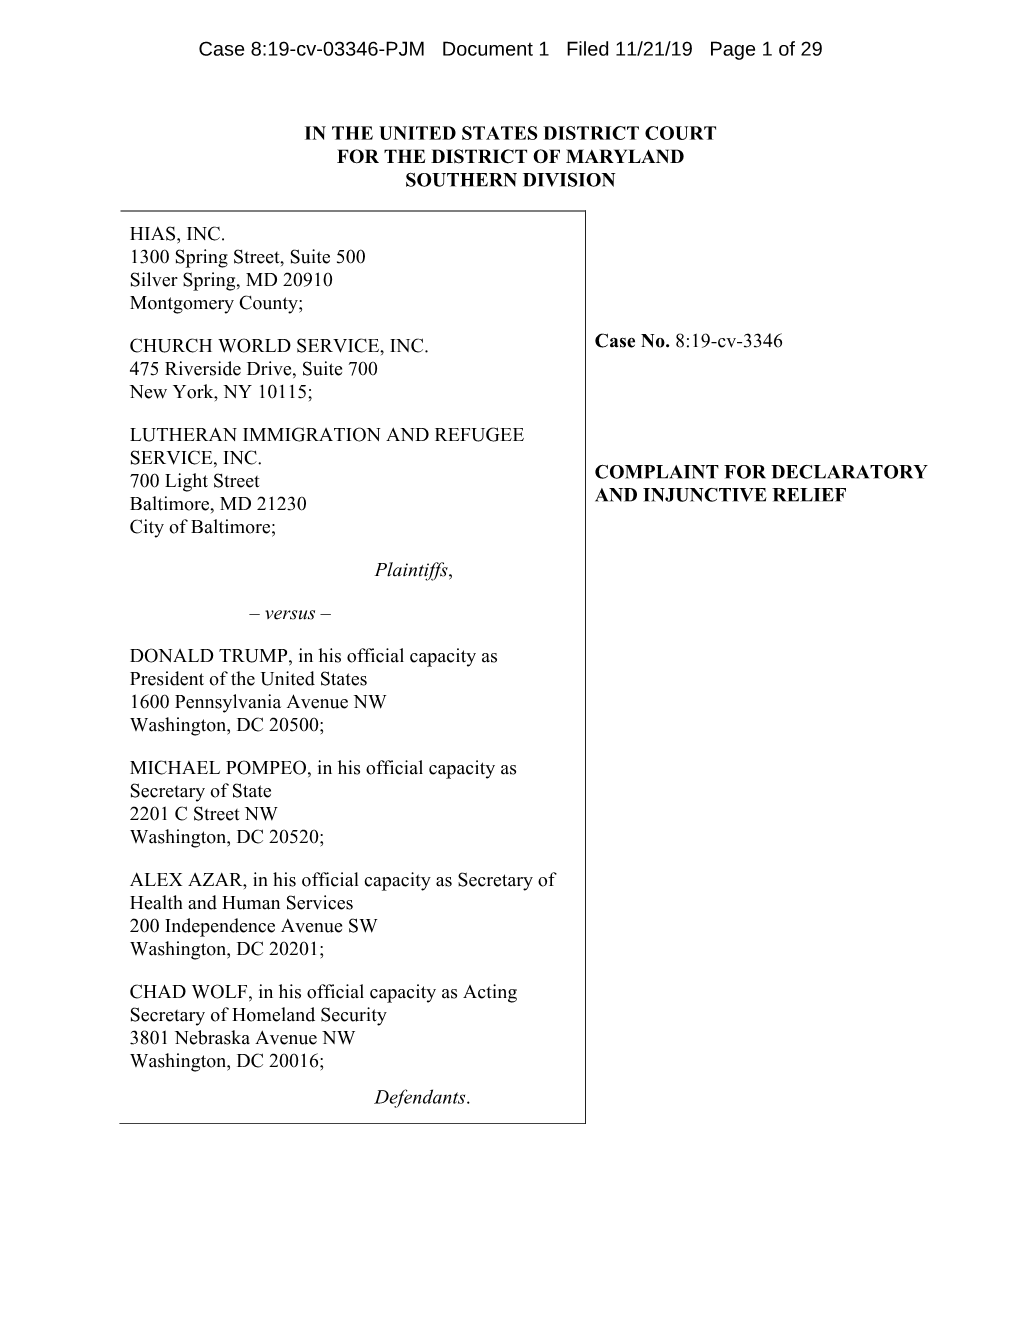 Case 8:19-Cv-03346-PJM Document 1 Filed 11/21/19 Page 1 of 29